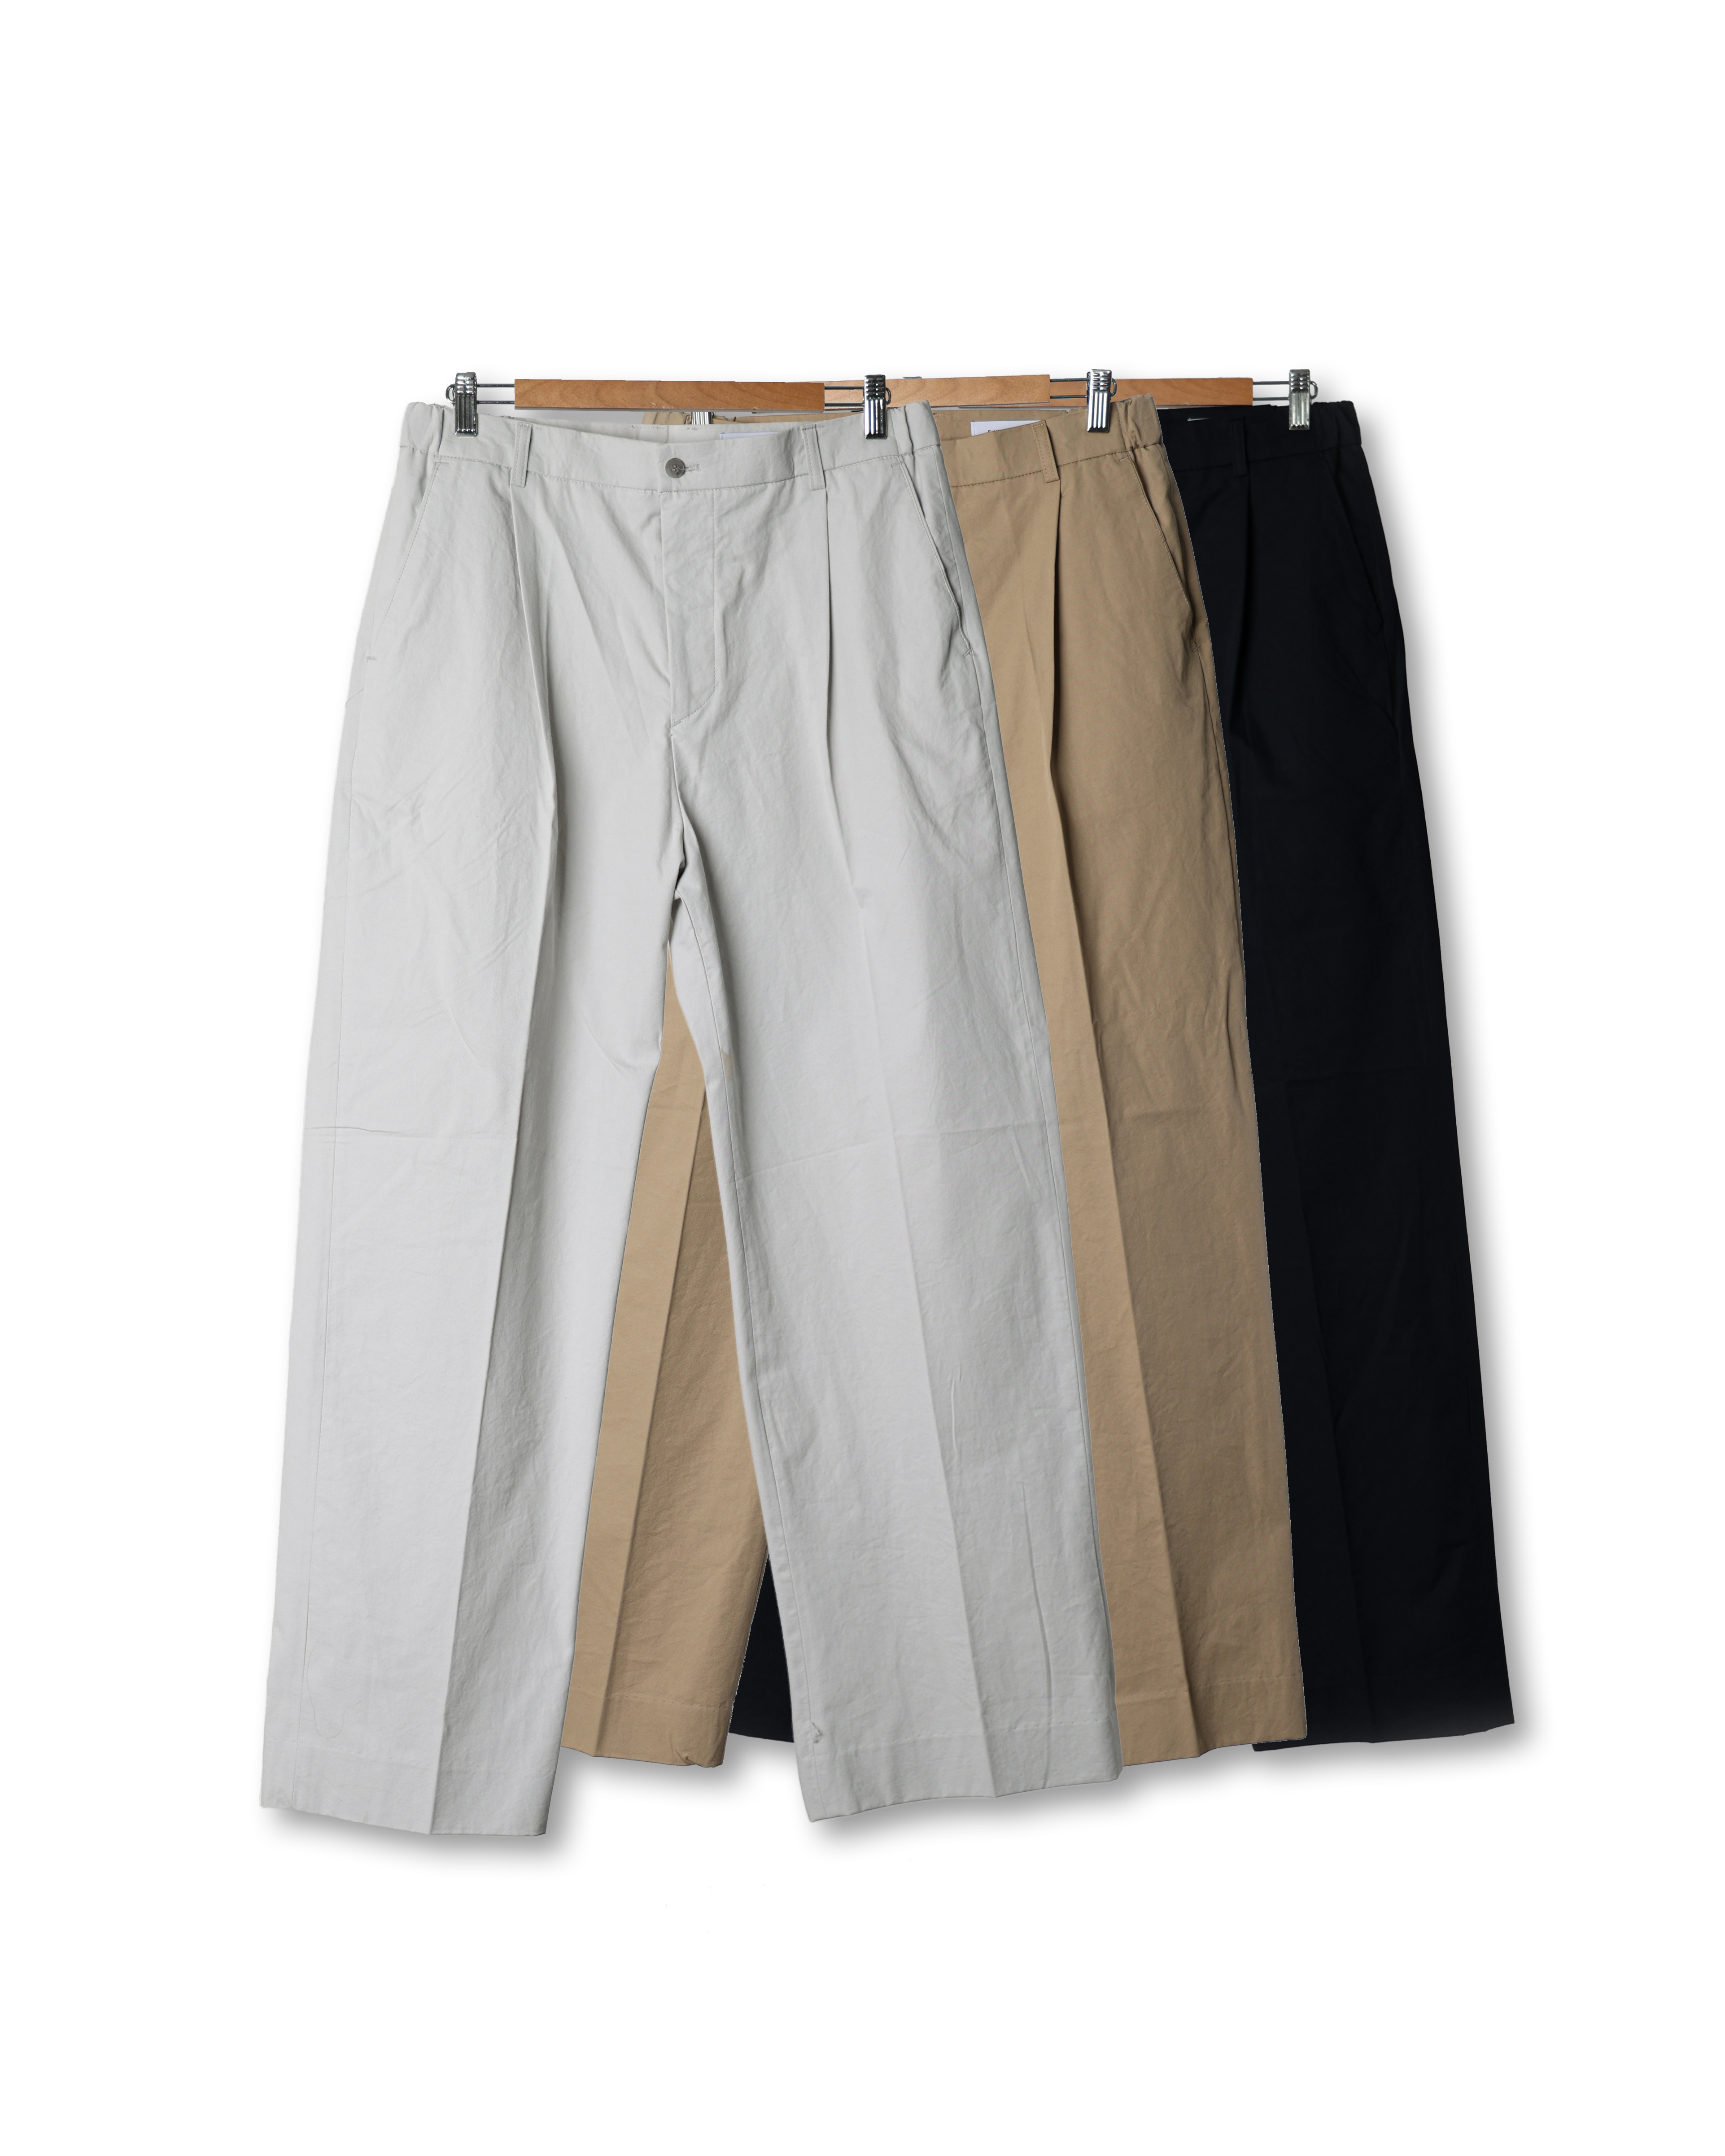 EBRIK Four Season Daily Chino Pants (Navy/Gray/Beige)